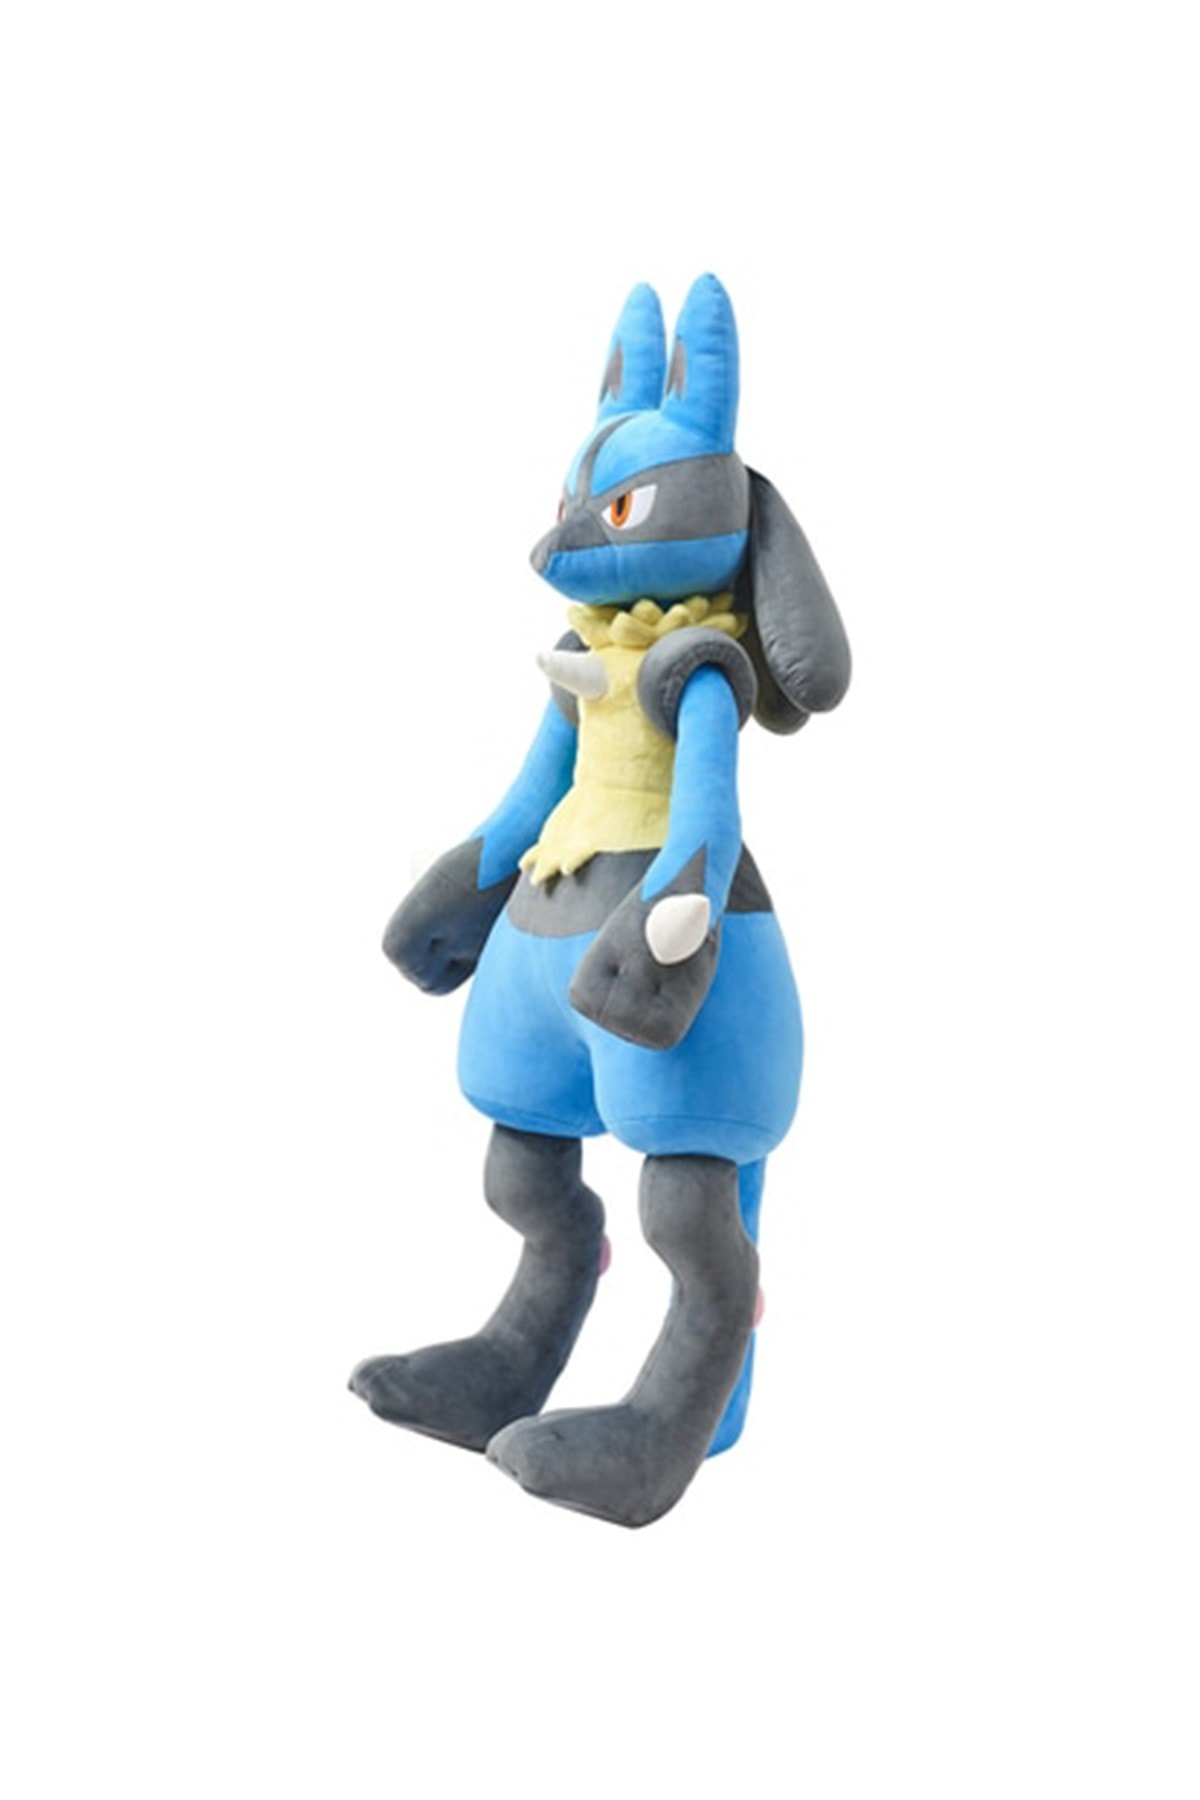 Pokémon 官方推出 1:1 尺寸等身 「Lucario 路卡利欧」毛绒玩偶